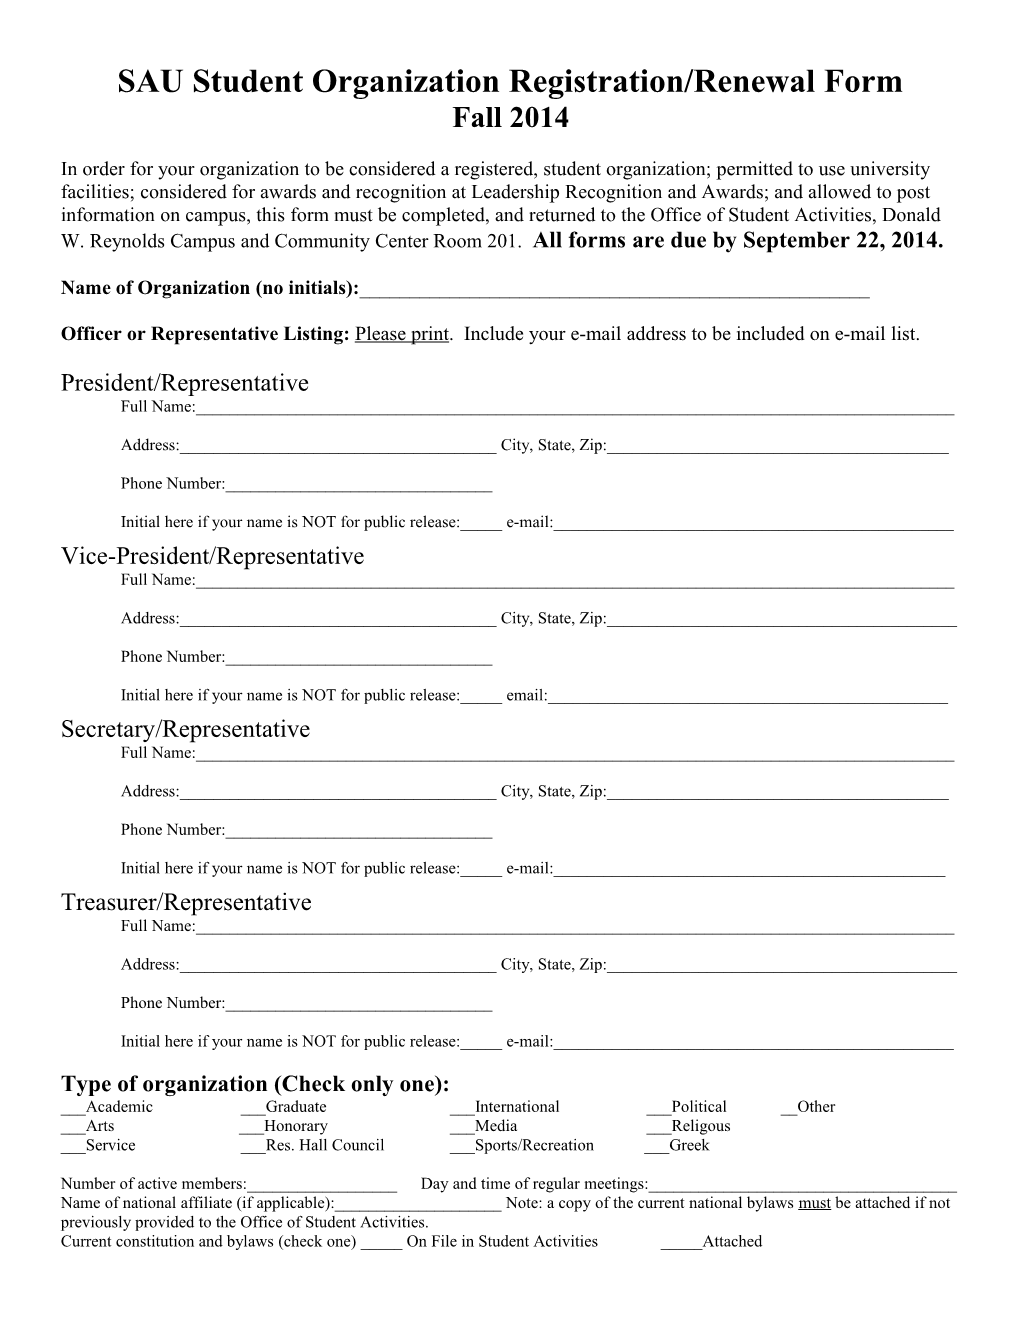 SAU Student Organization Registration/Renewal Form